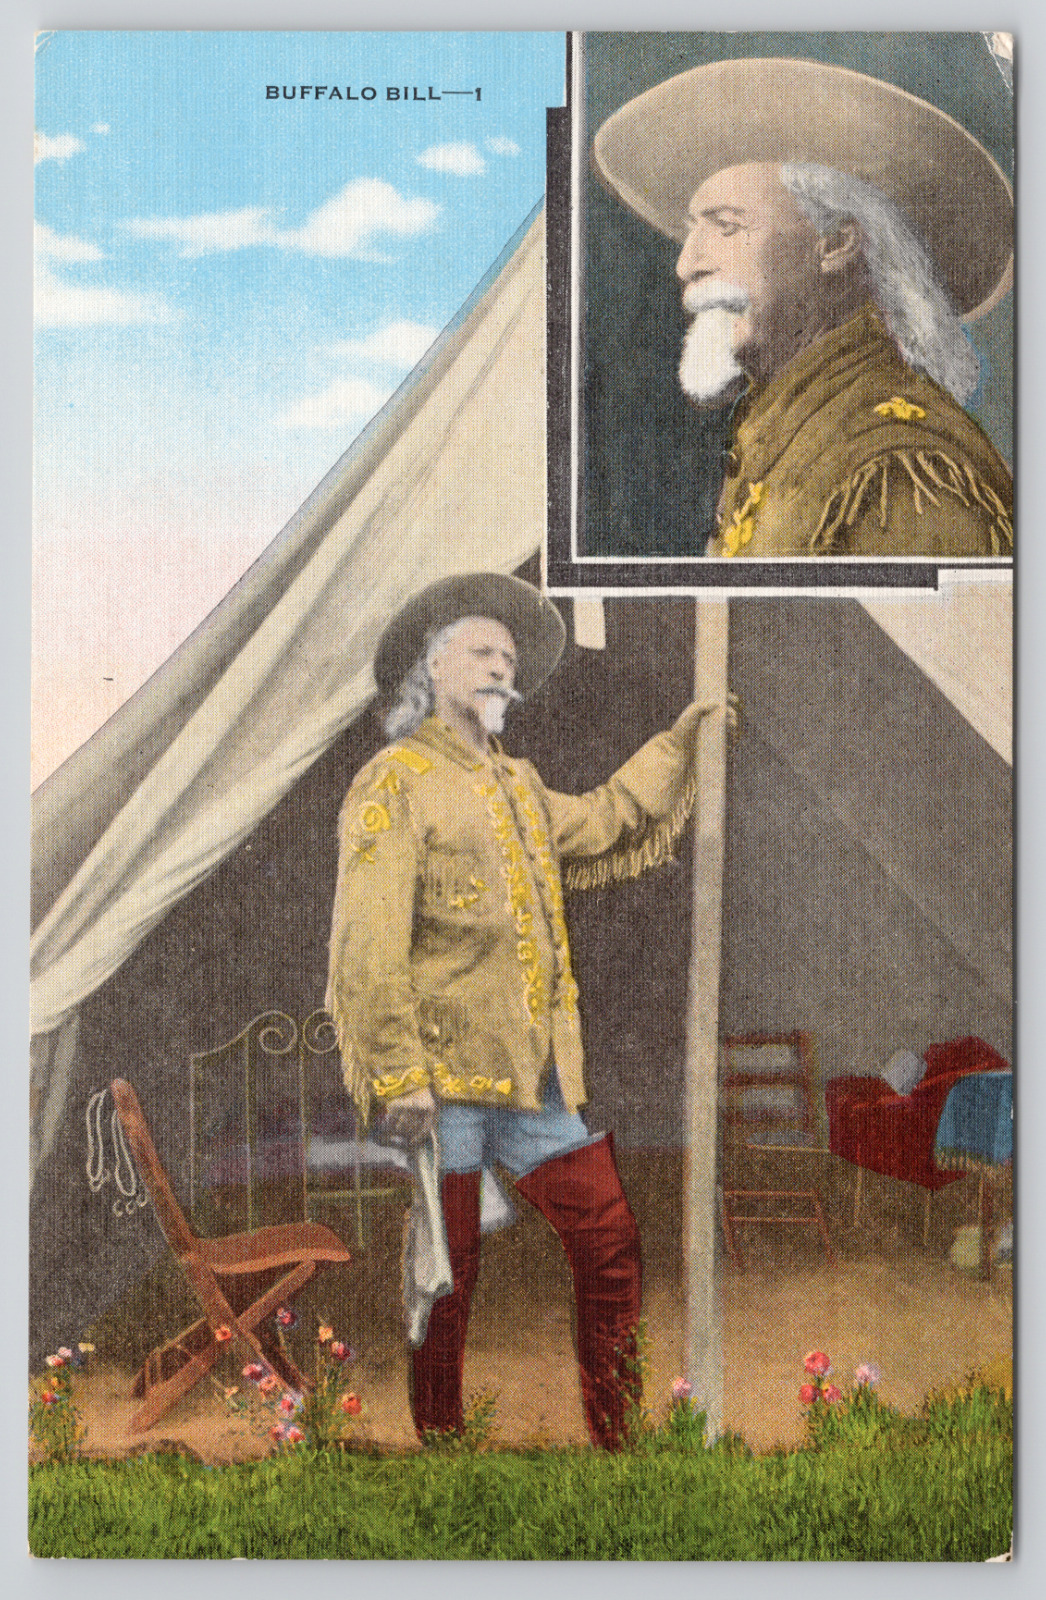 Colonel William Buffalo Bill Cody Holding Tent Western Linen Postcard